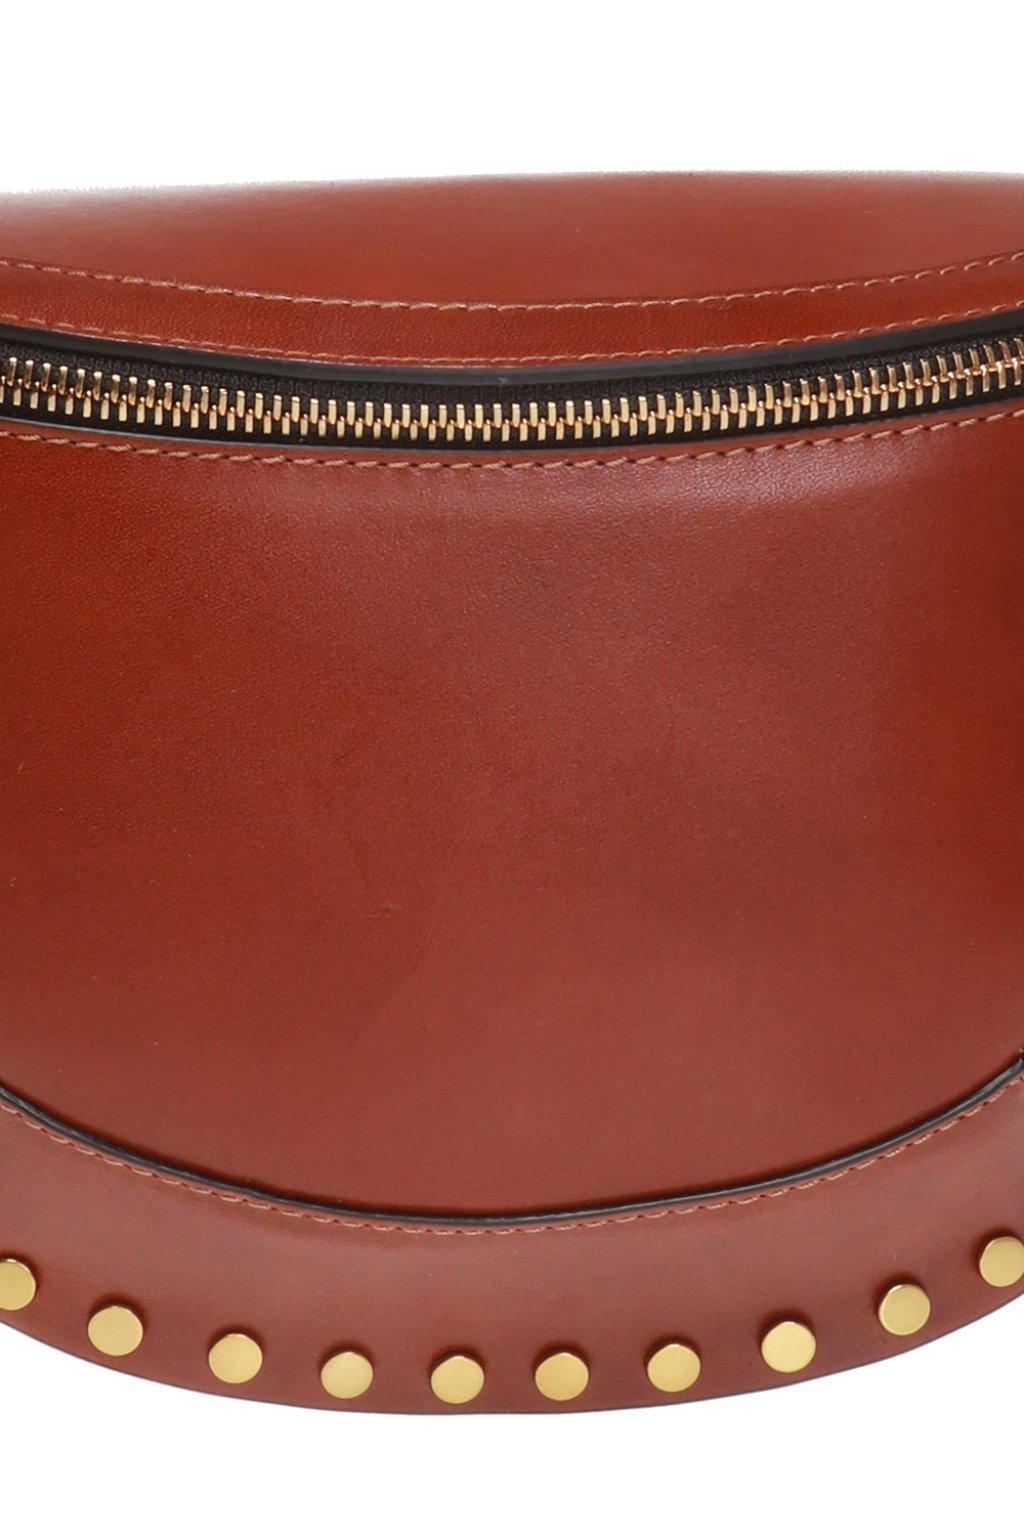 Isabel Marant Leather Skano Belt Bag in Brown - Lyst